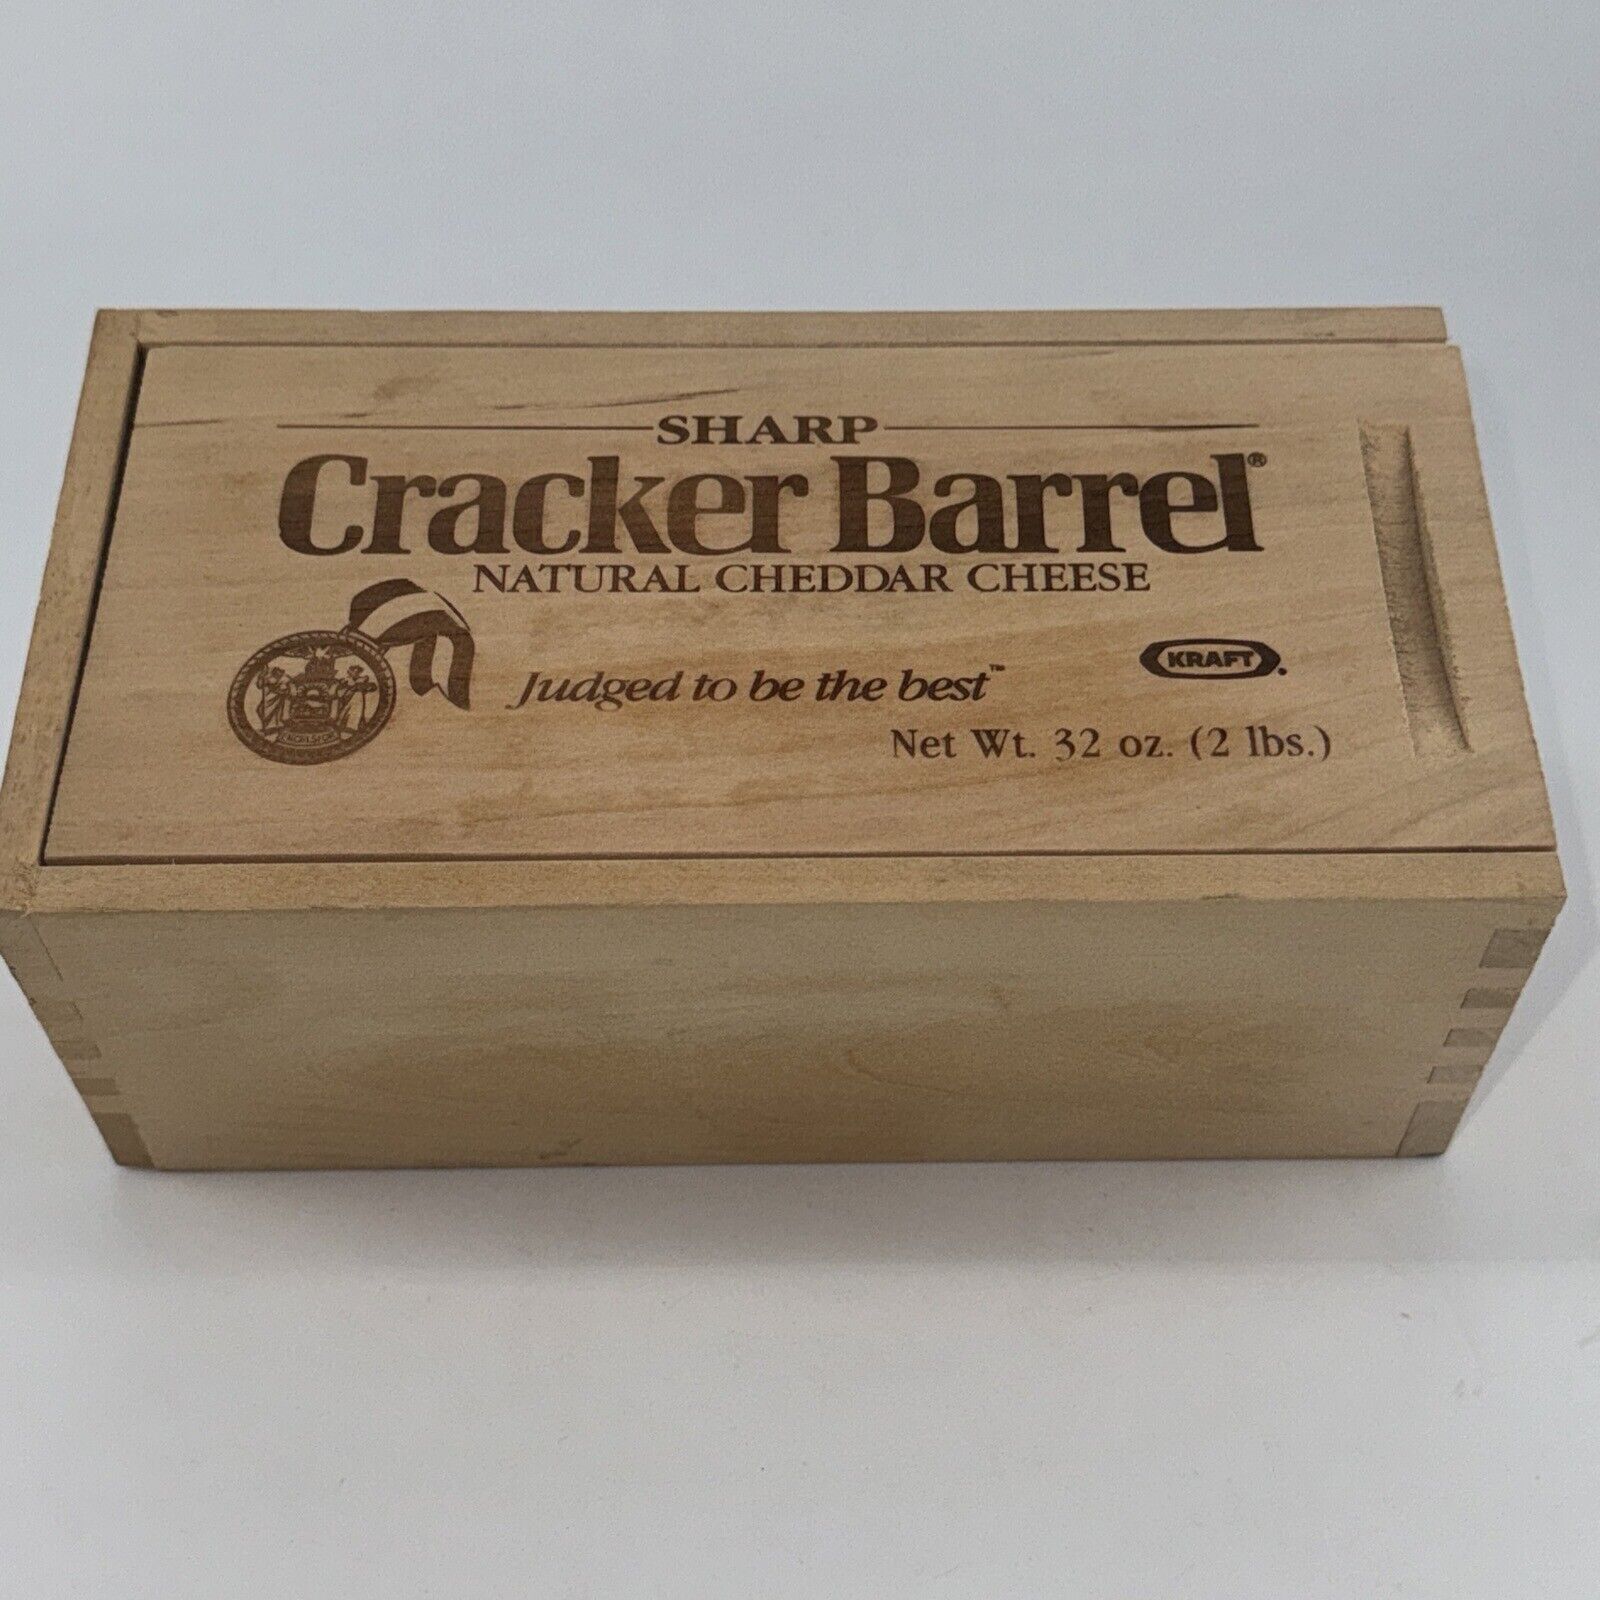 Vintage Cracker Barrel Sharp Cheddar Cheese Wooden Box w/ Sliding Lid 8x4x3 1997